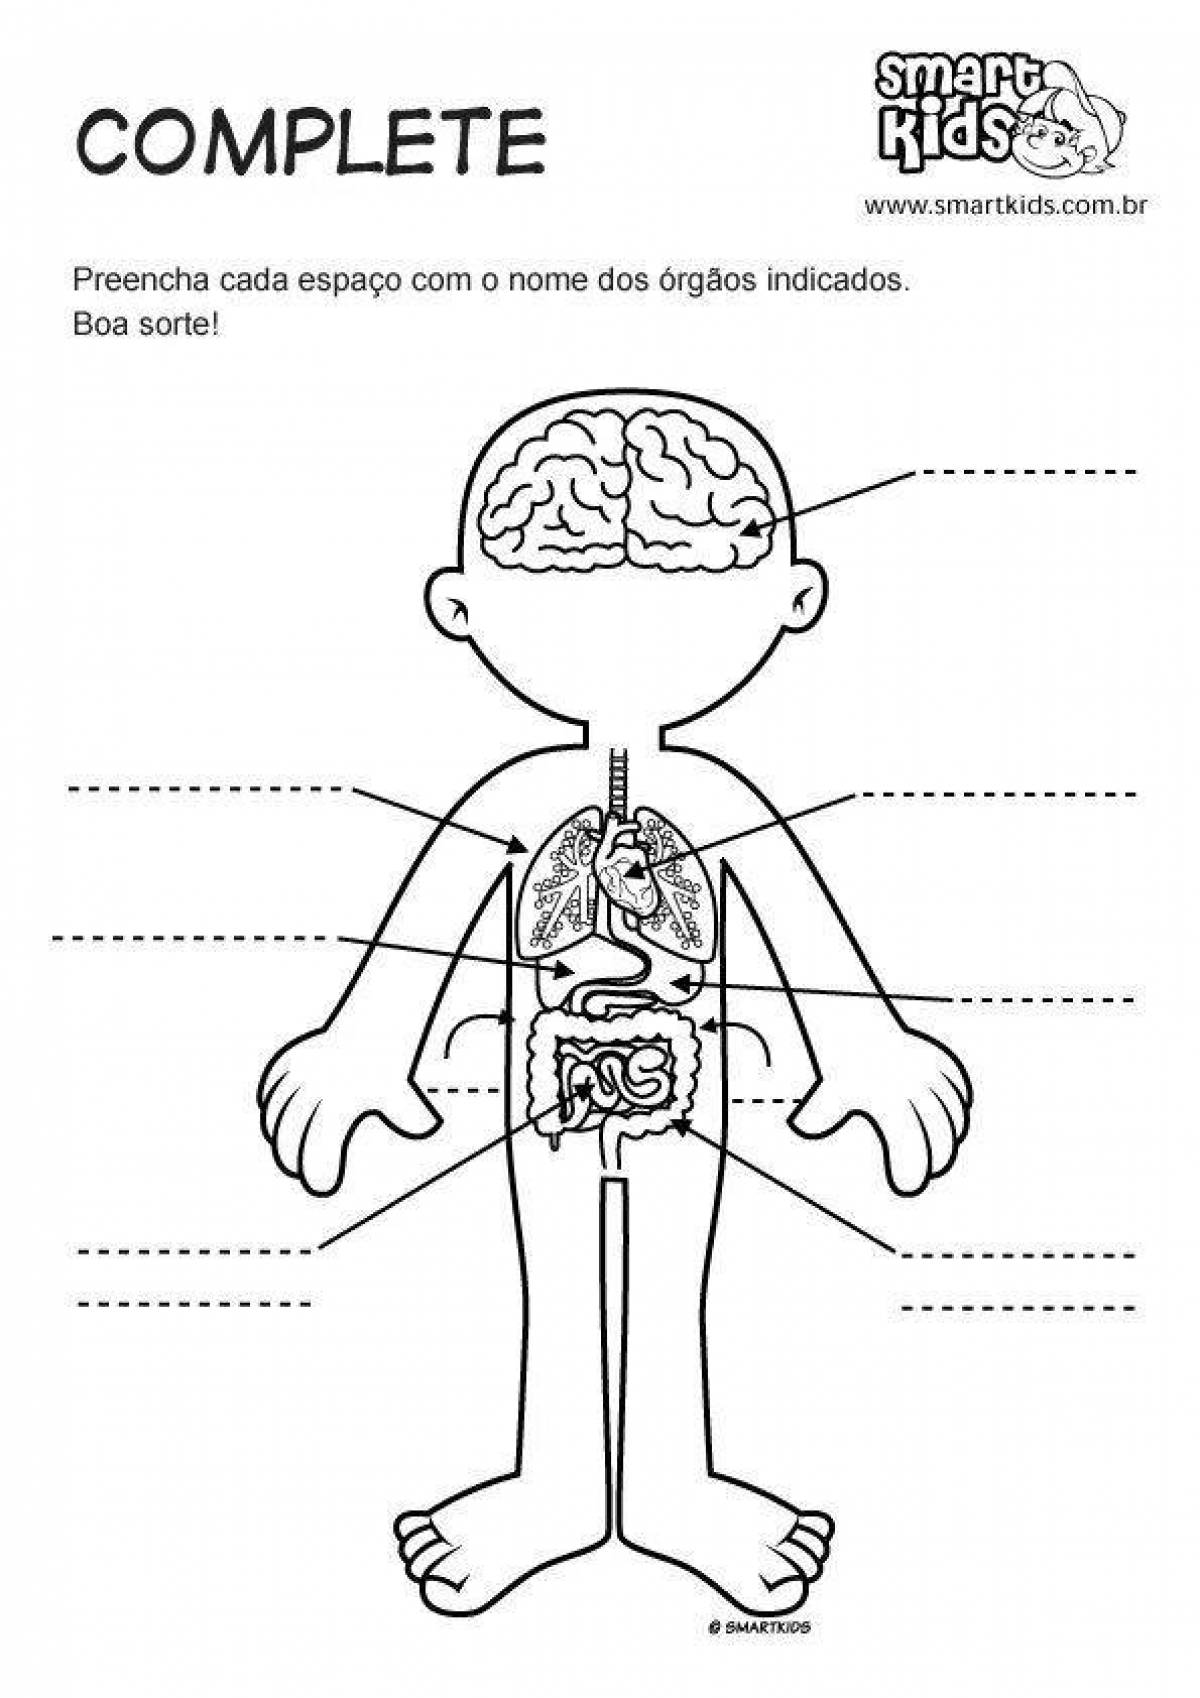 Human organs for children #9